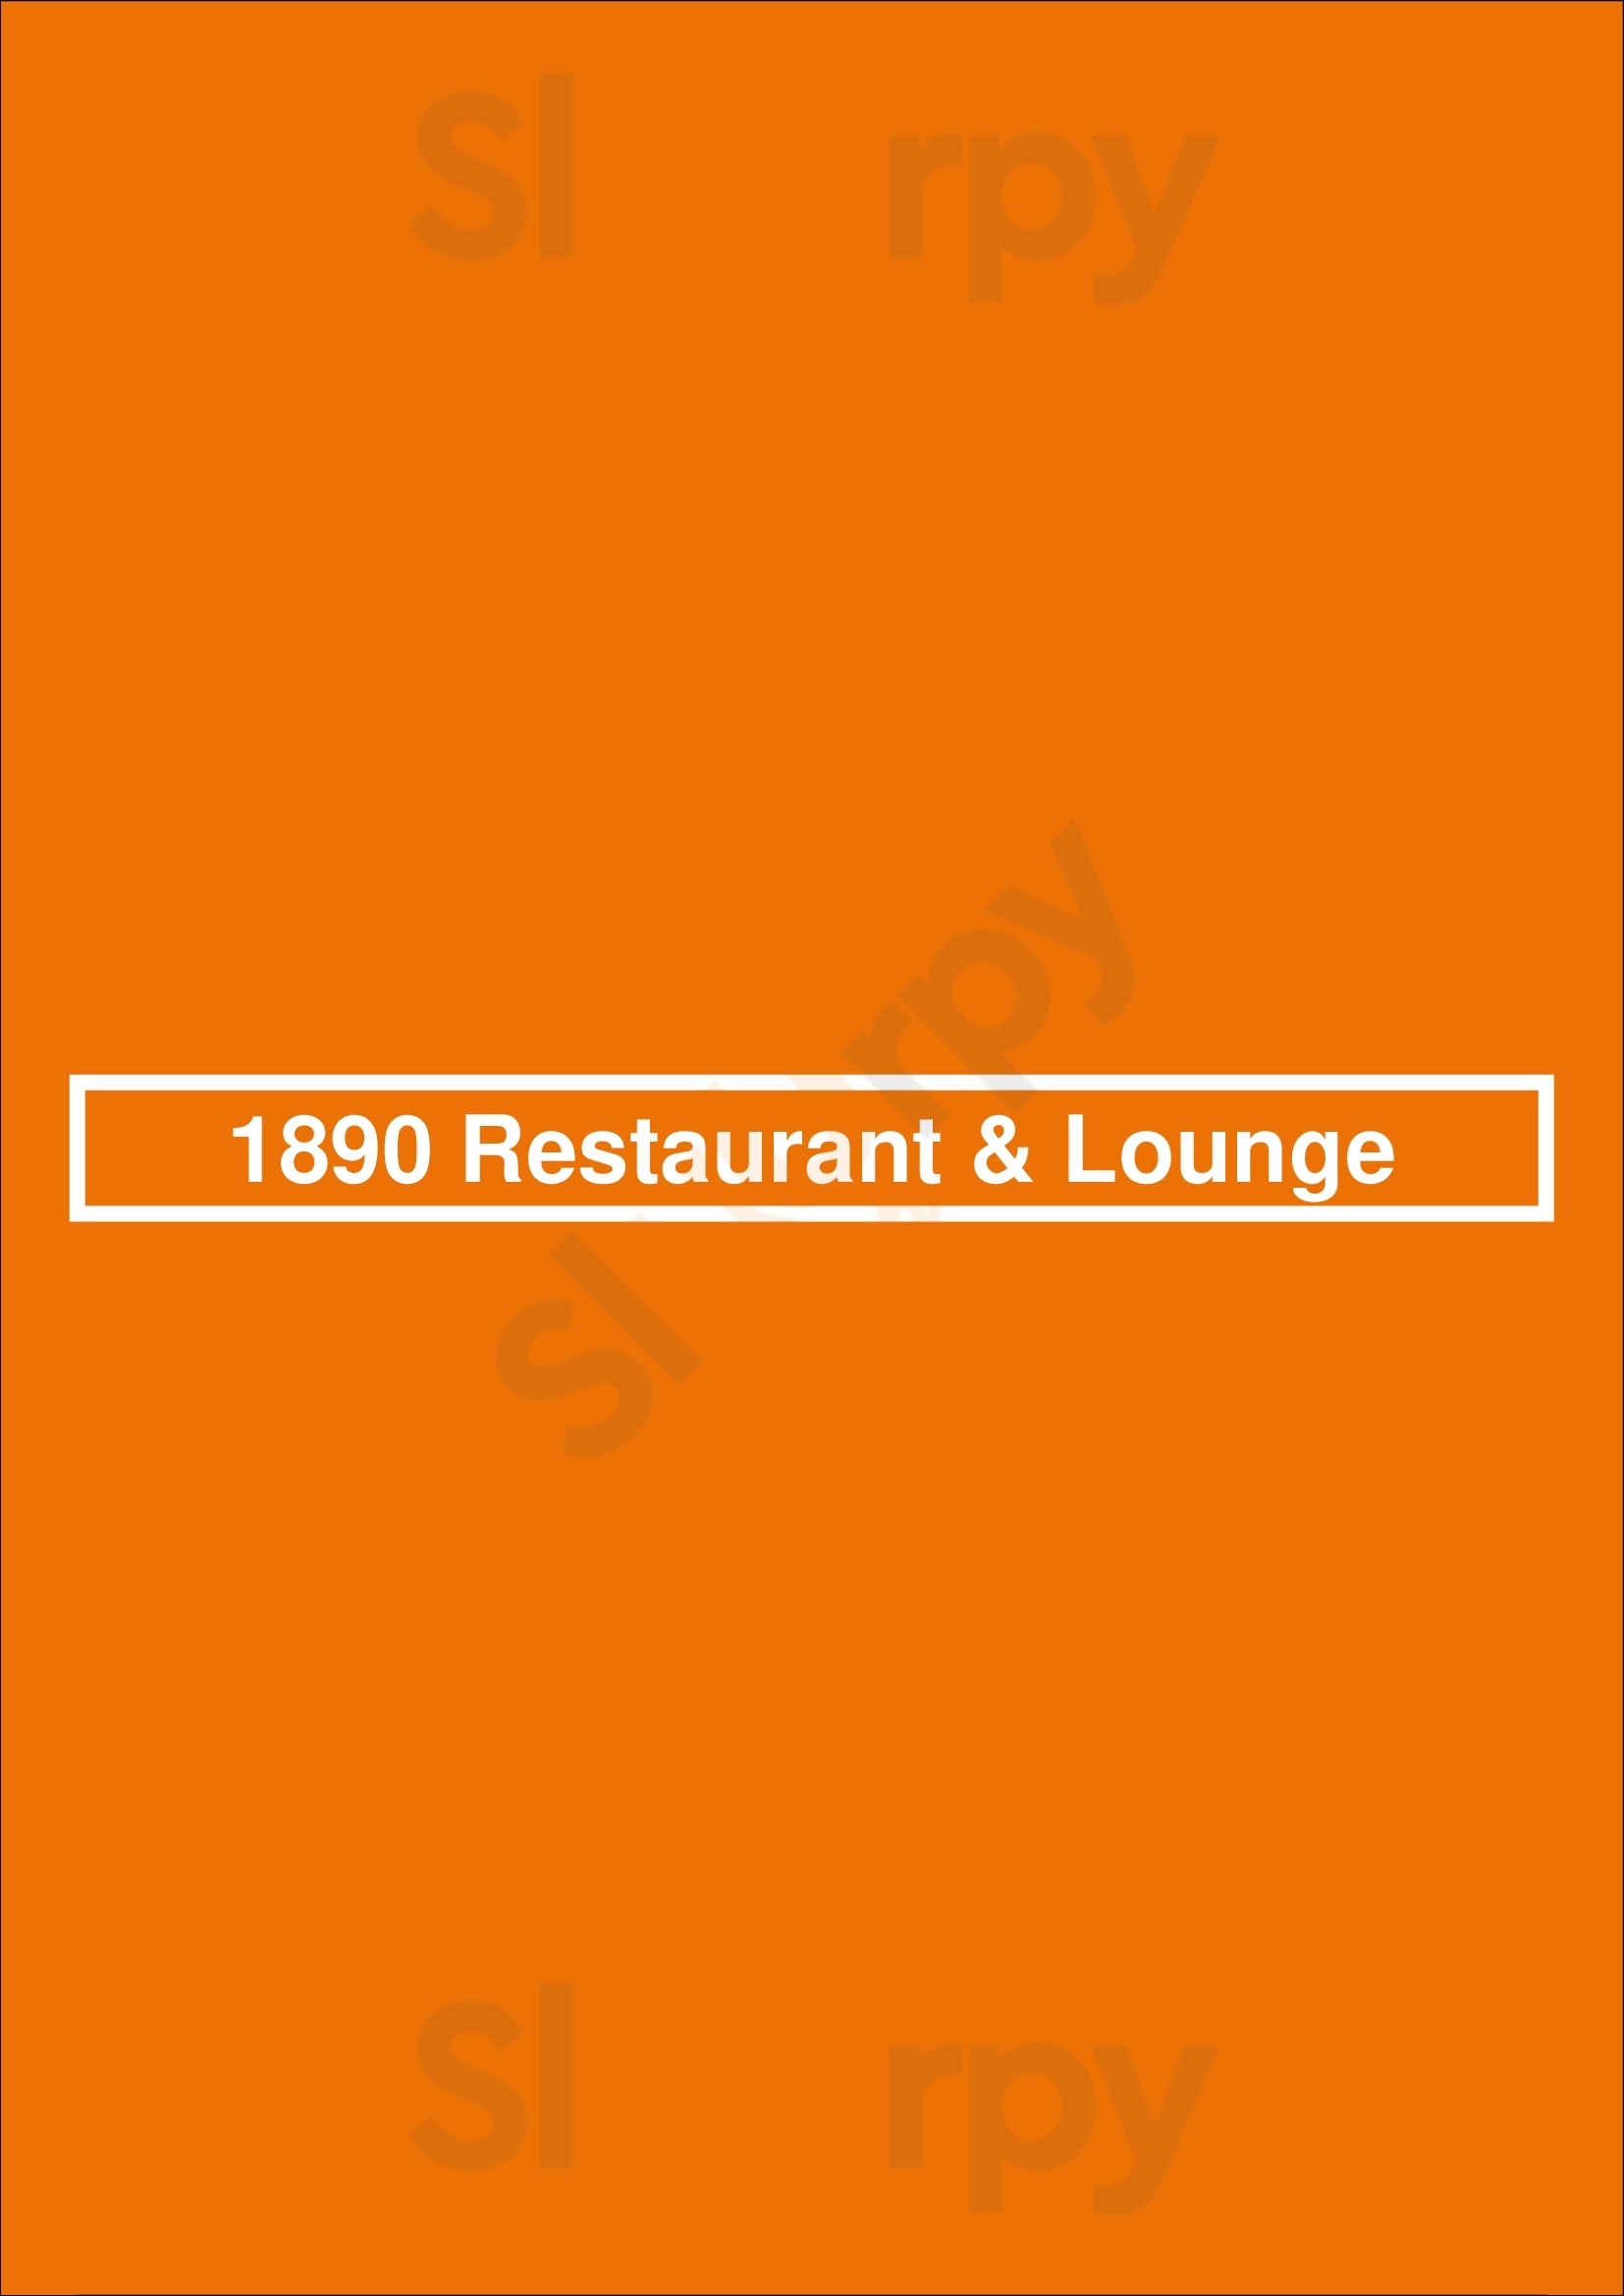 1890 Restaurant & Lounge Cleveland Menu - 1